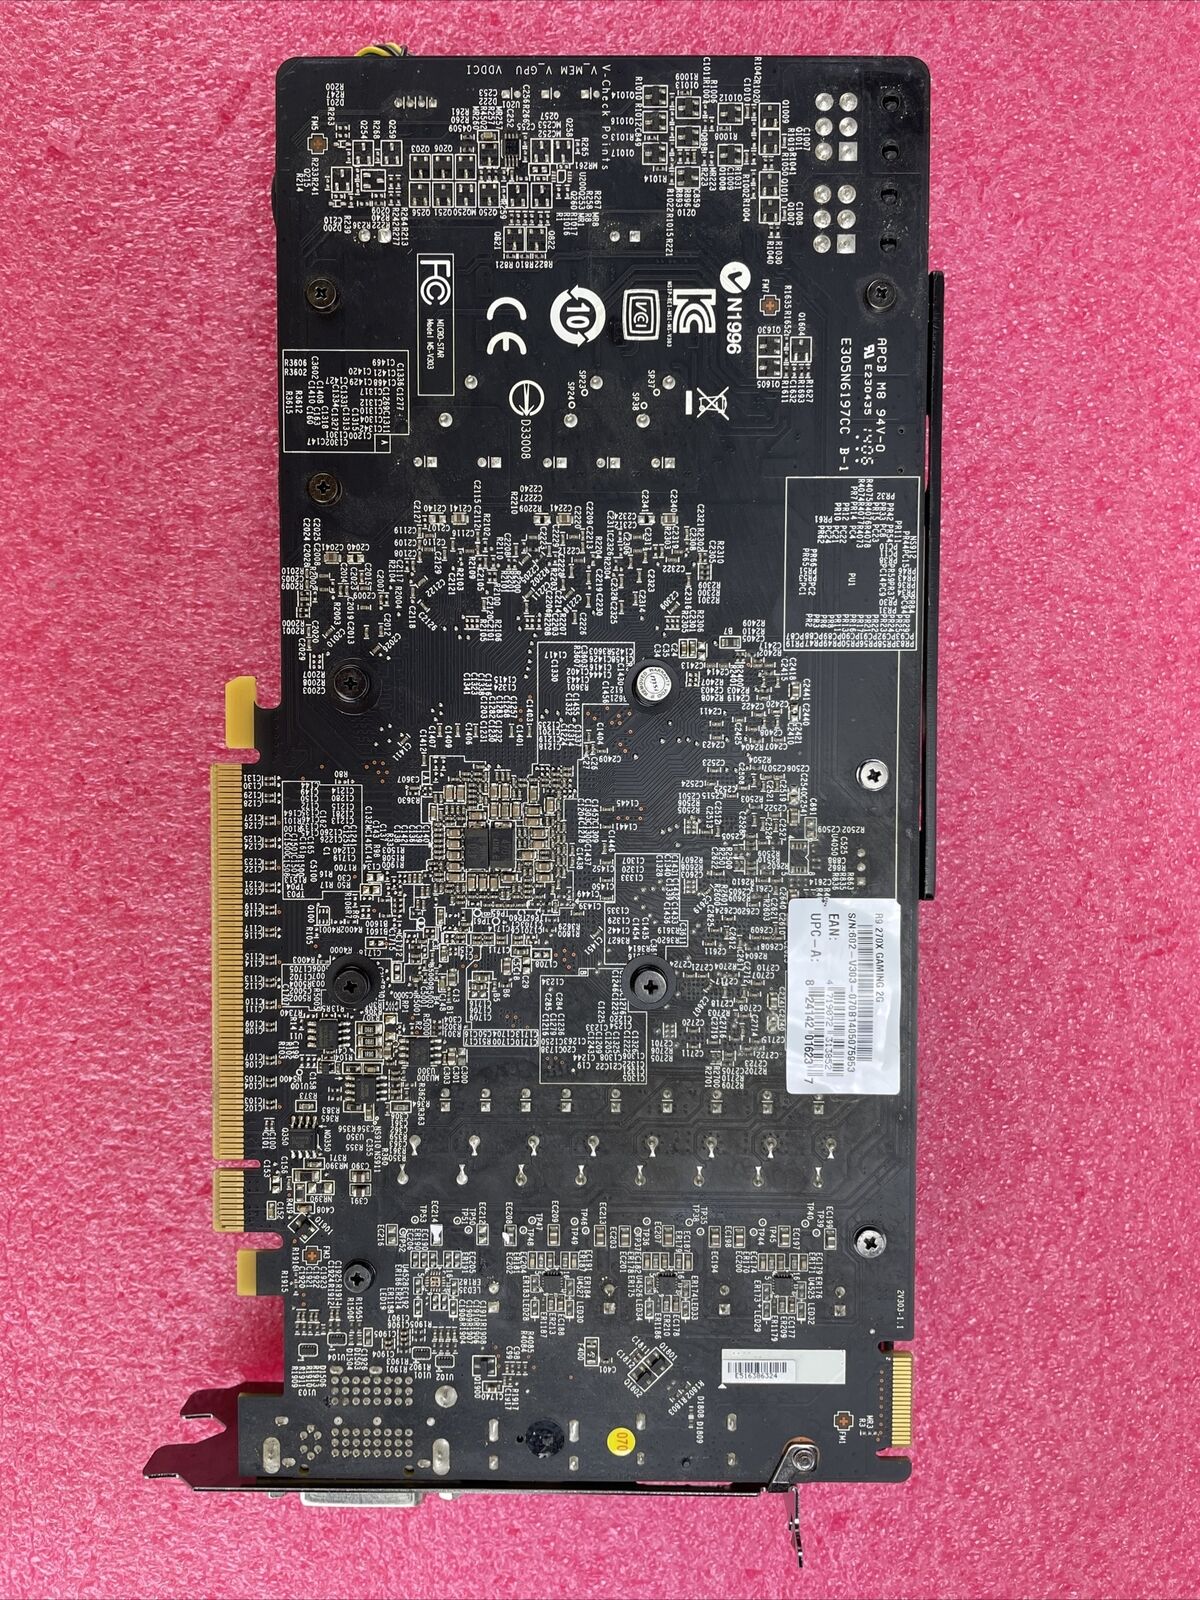 MSI Radeon R9 270X Gaming 2G PCIe Graphics Card